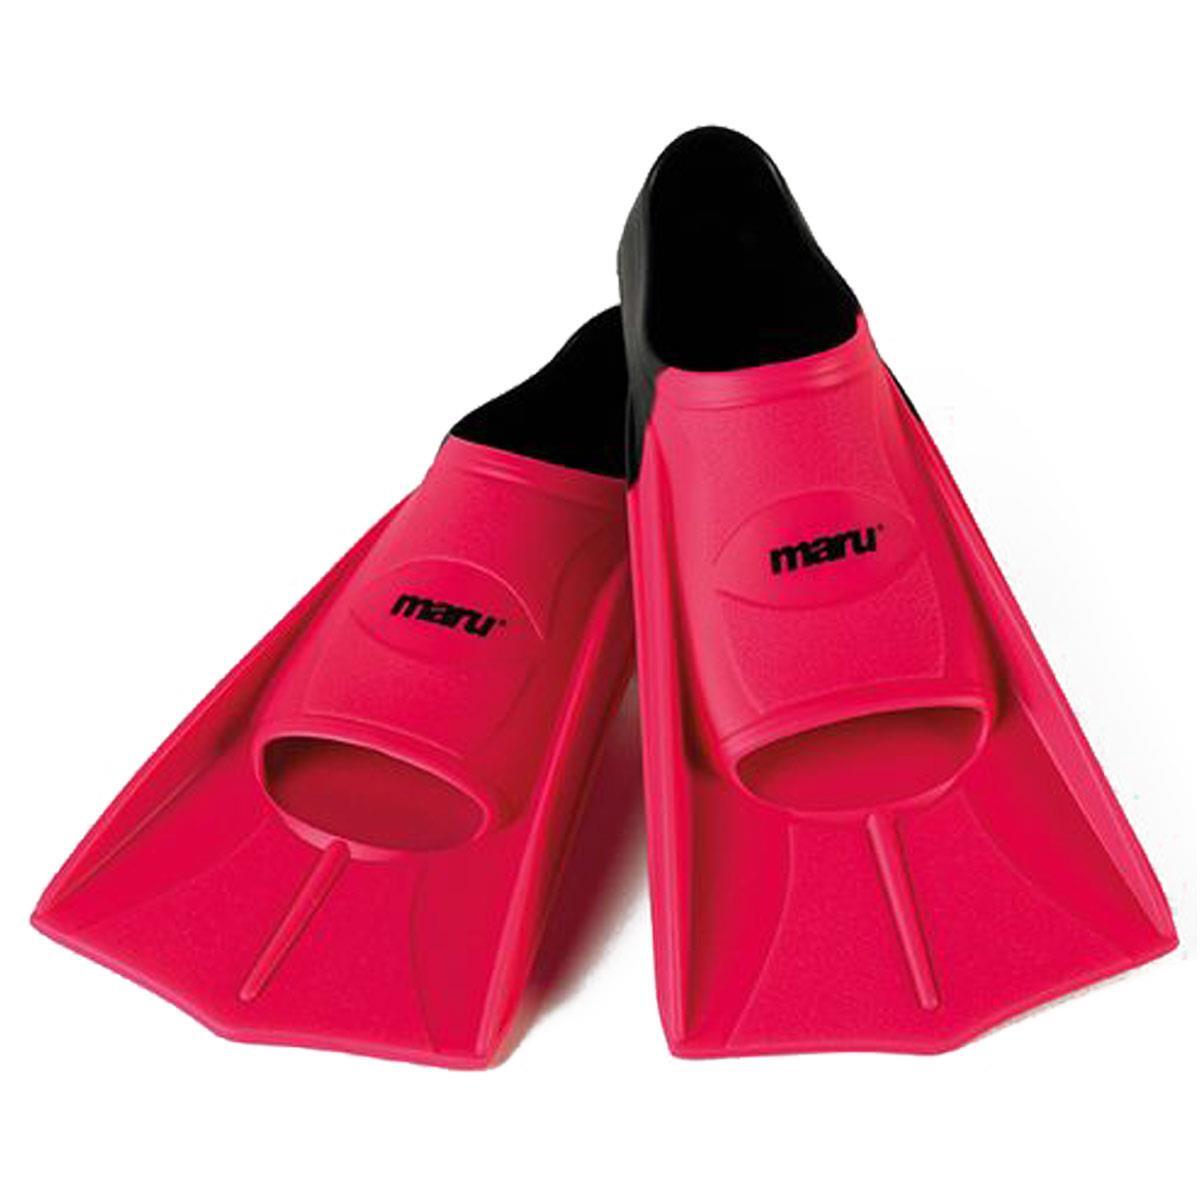 Maru Training Fins - Neon Pink/Black 1/2